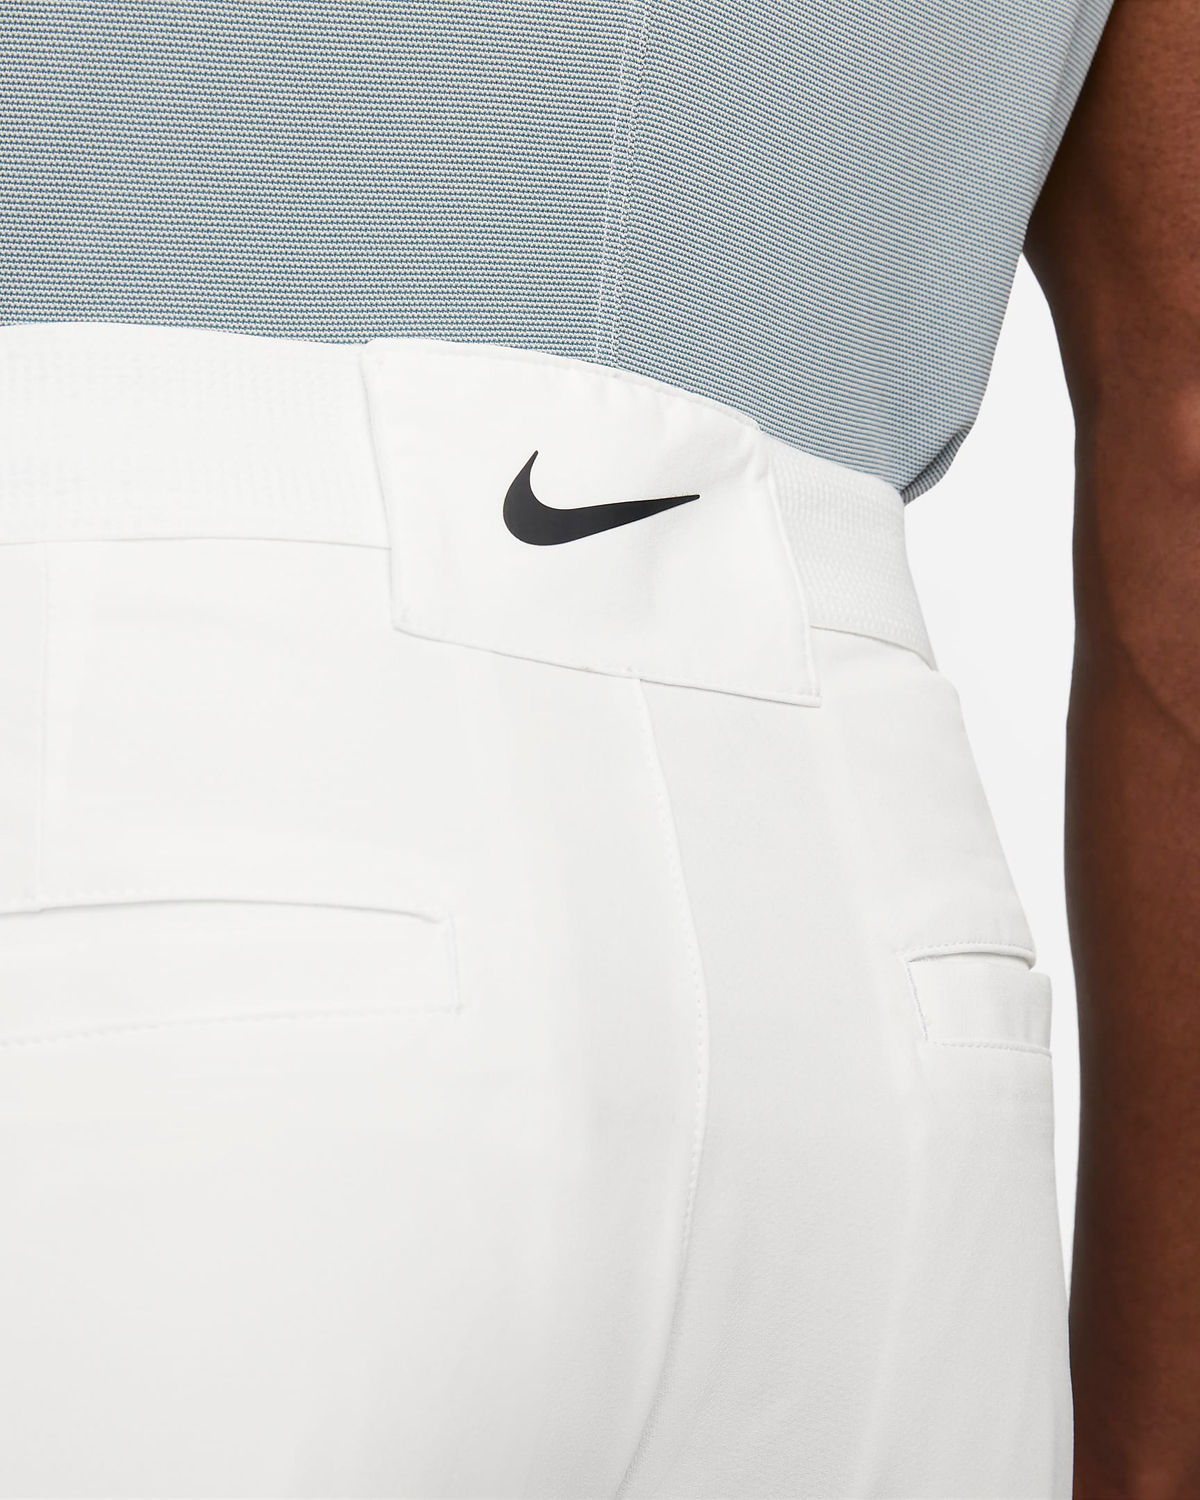 Nike-Vapor-Slim-Fit-Golf-Pants-White-2